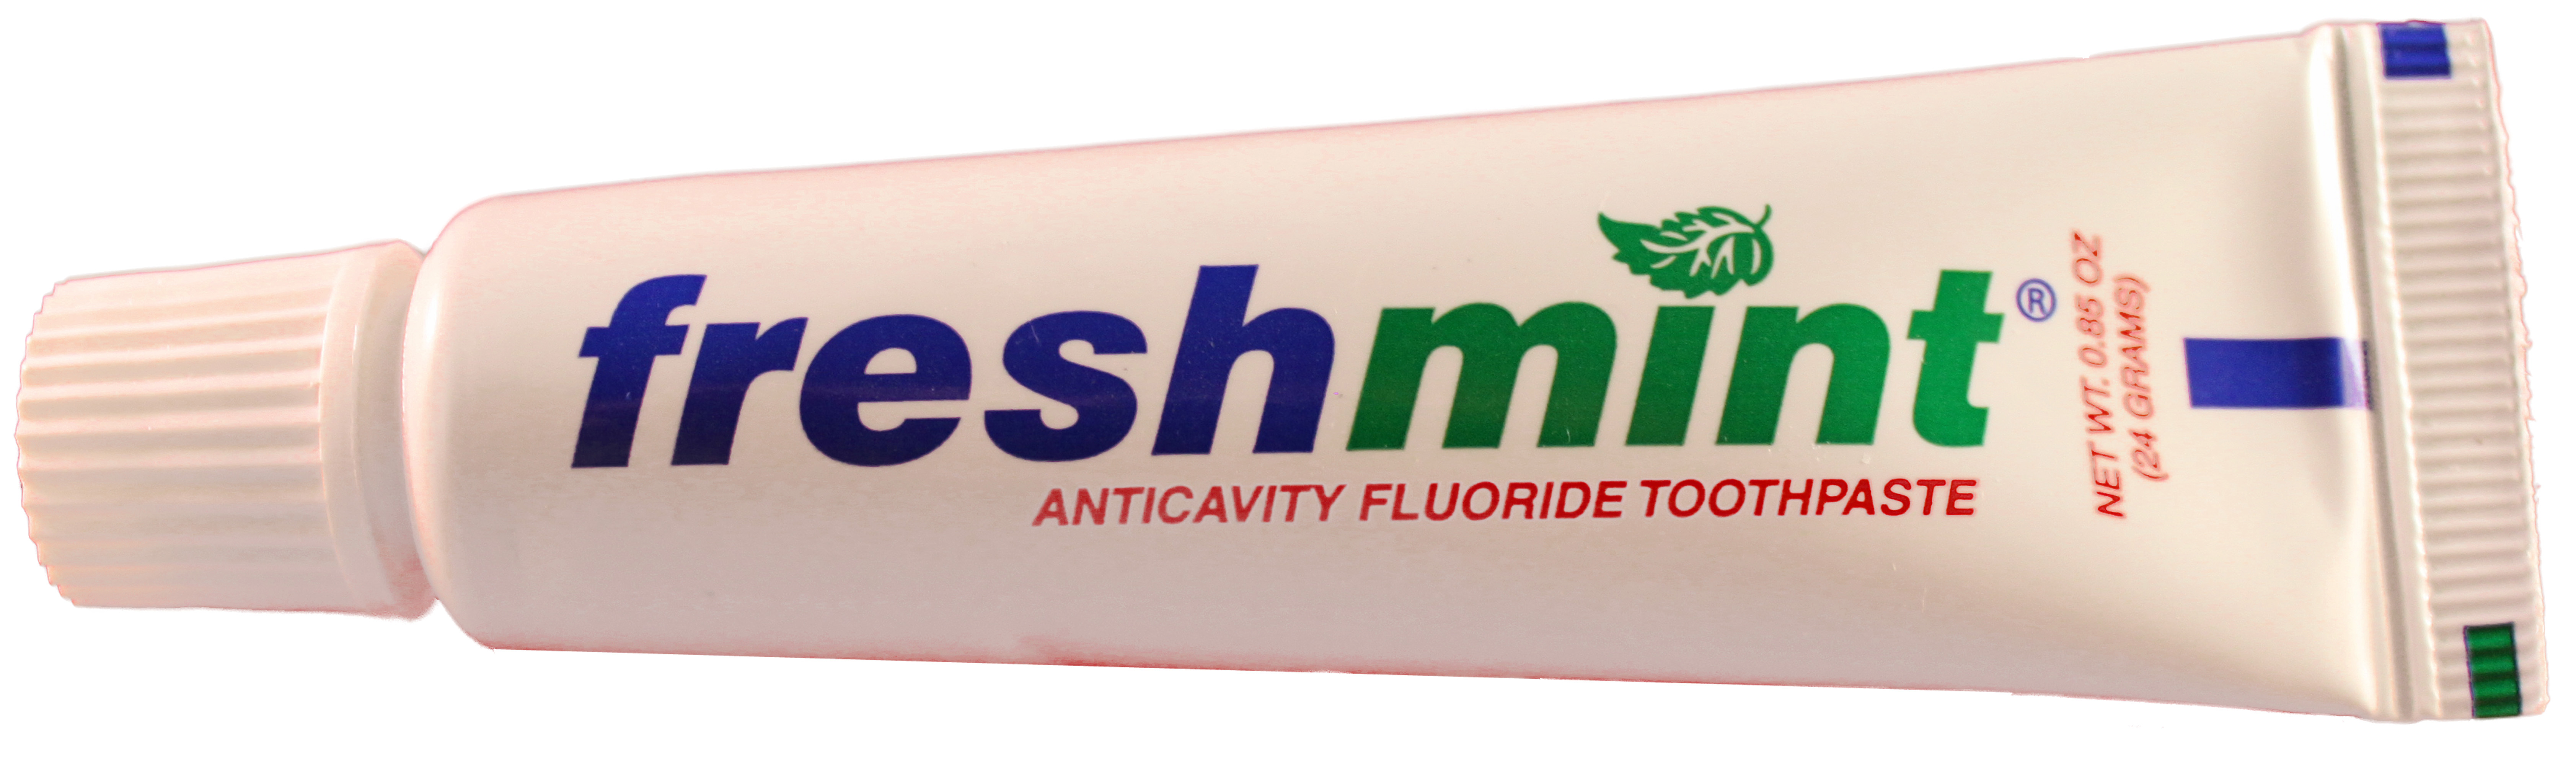 Freshmint 0.85 oz. Anticavity Fluoride TOOTHPASTE